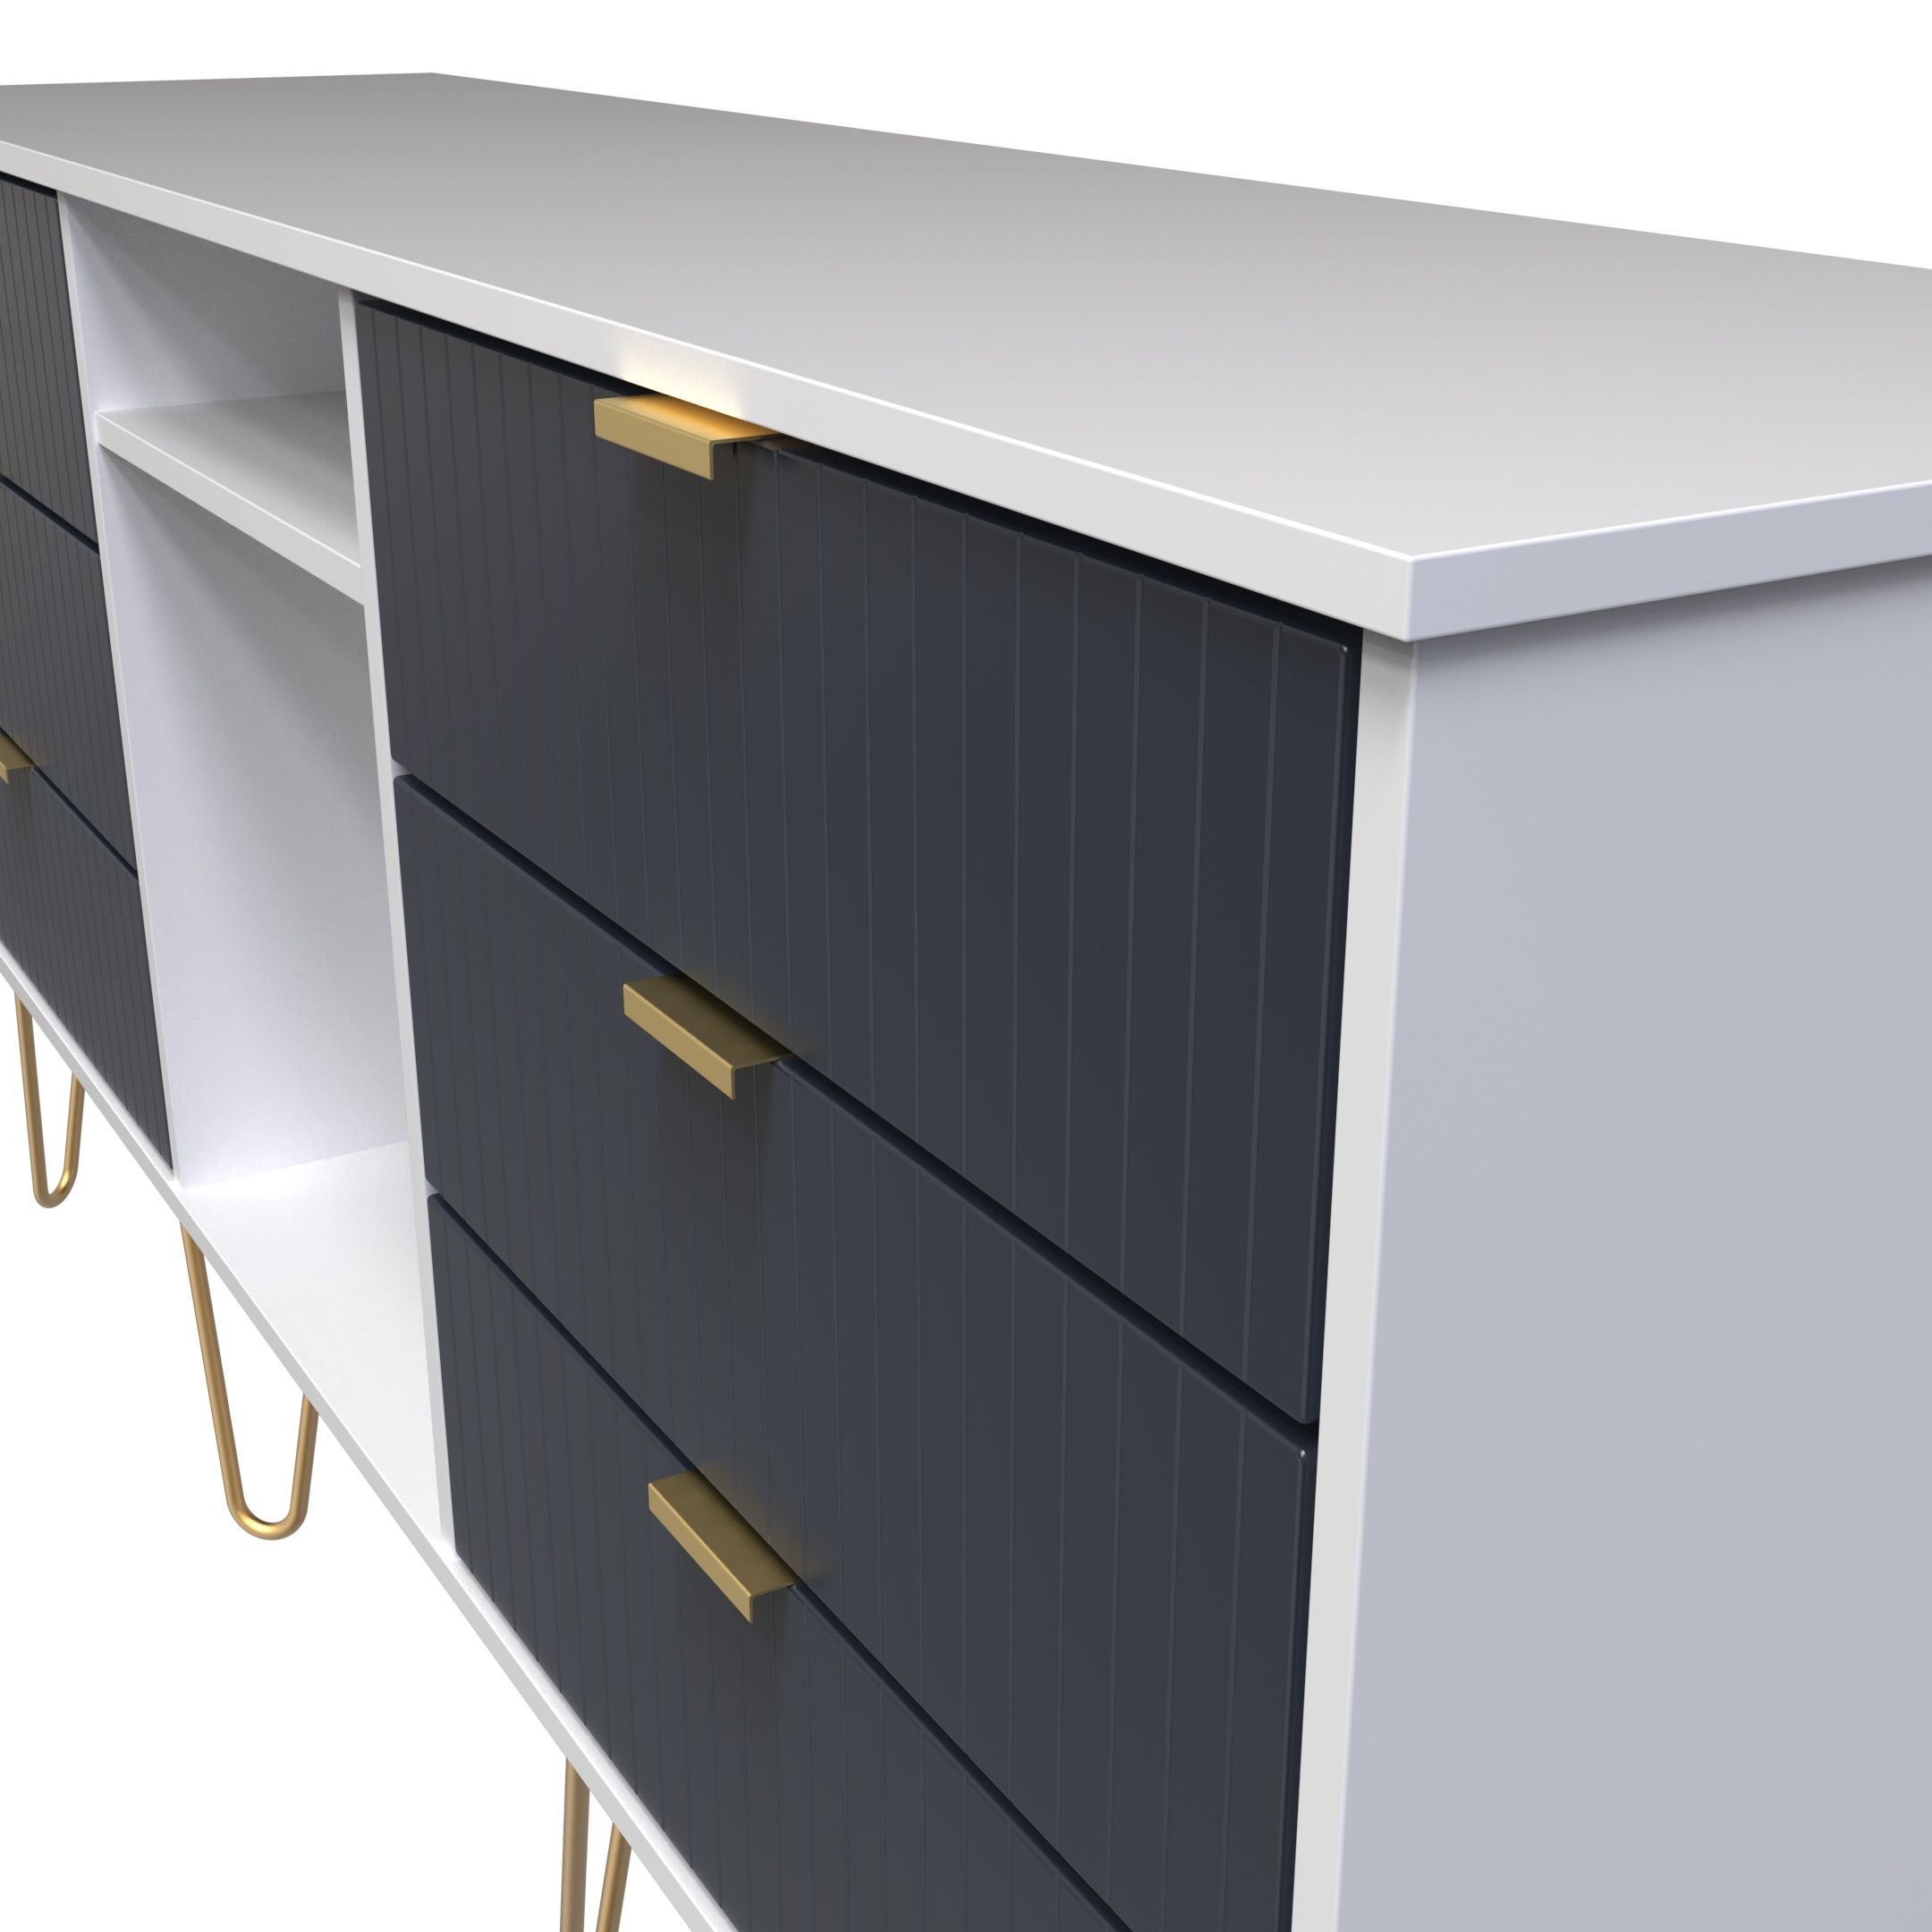 Linear Ready assembled Matt indigo & white Media unit with 2 shelves & 6 drawers, (H)152cm x (W)74cm x (D)39.5cm